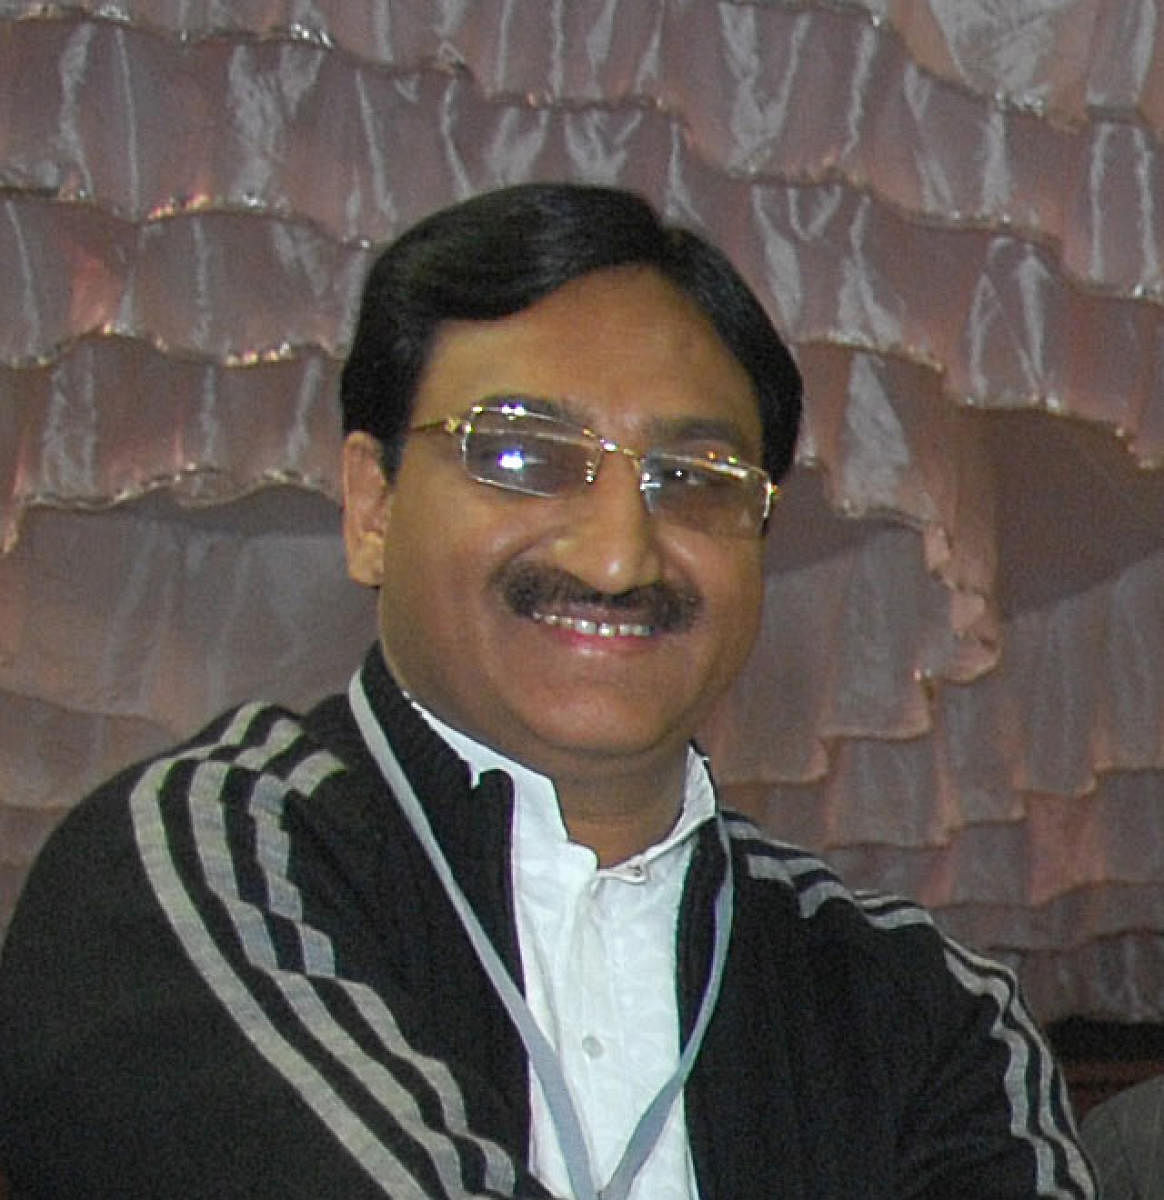 Union HRD Minister Ramesh Pokhriyal "Nishank" 